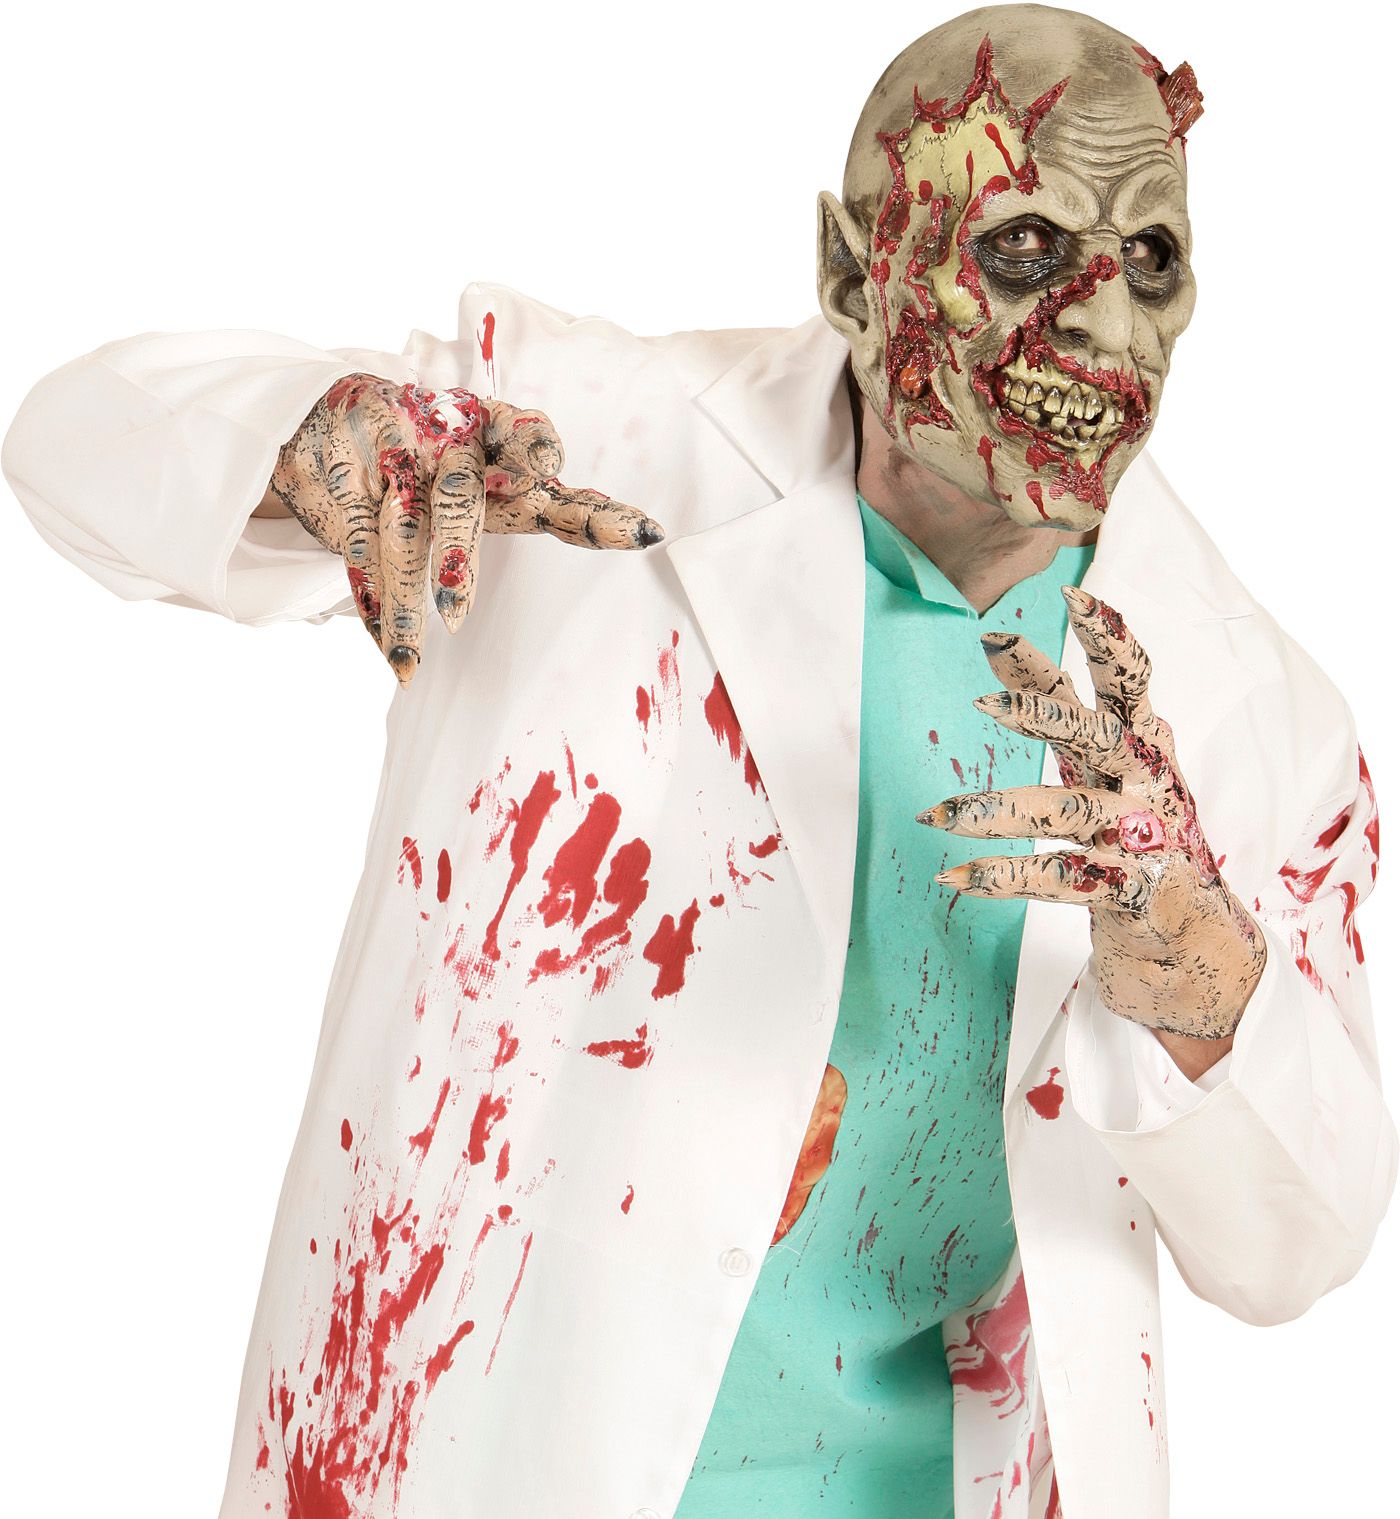  Laboratorium  zombie masker  Carnavalskleding nl